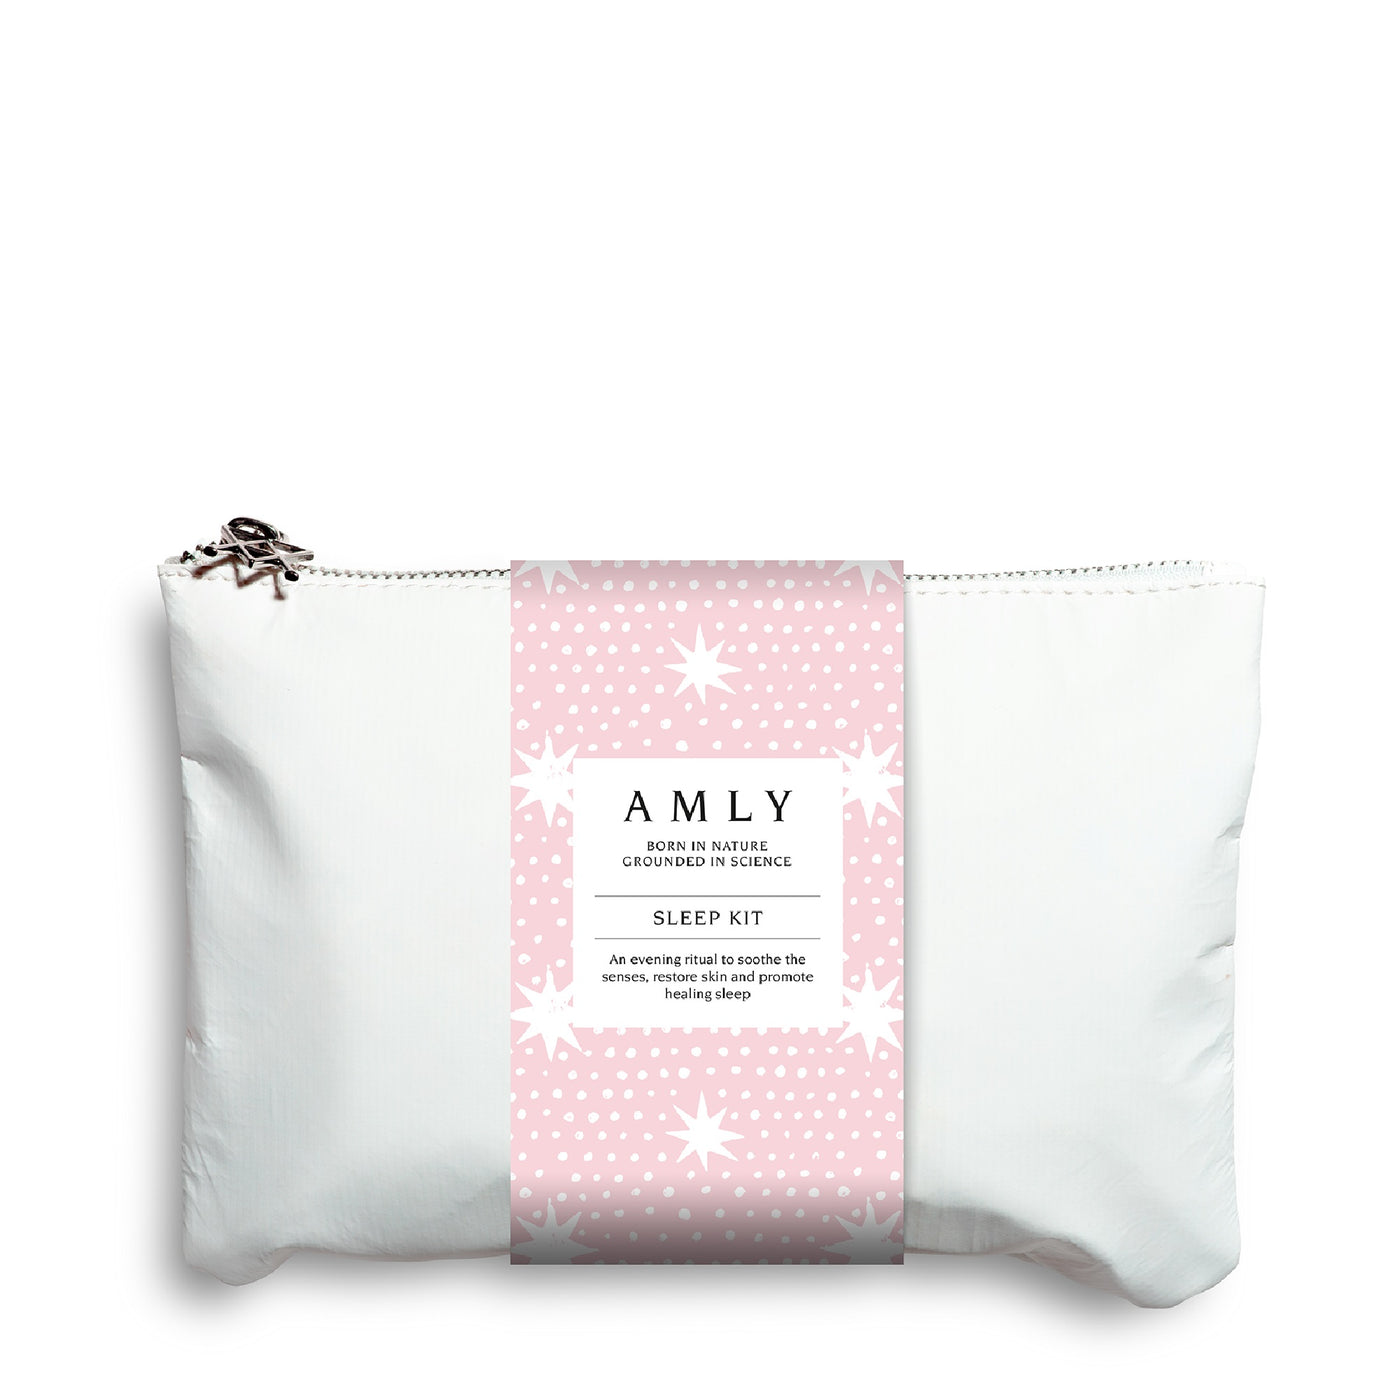 Amly Discovery Kit - Sleep - 6 x Items